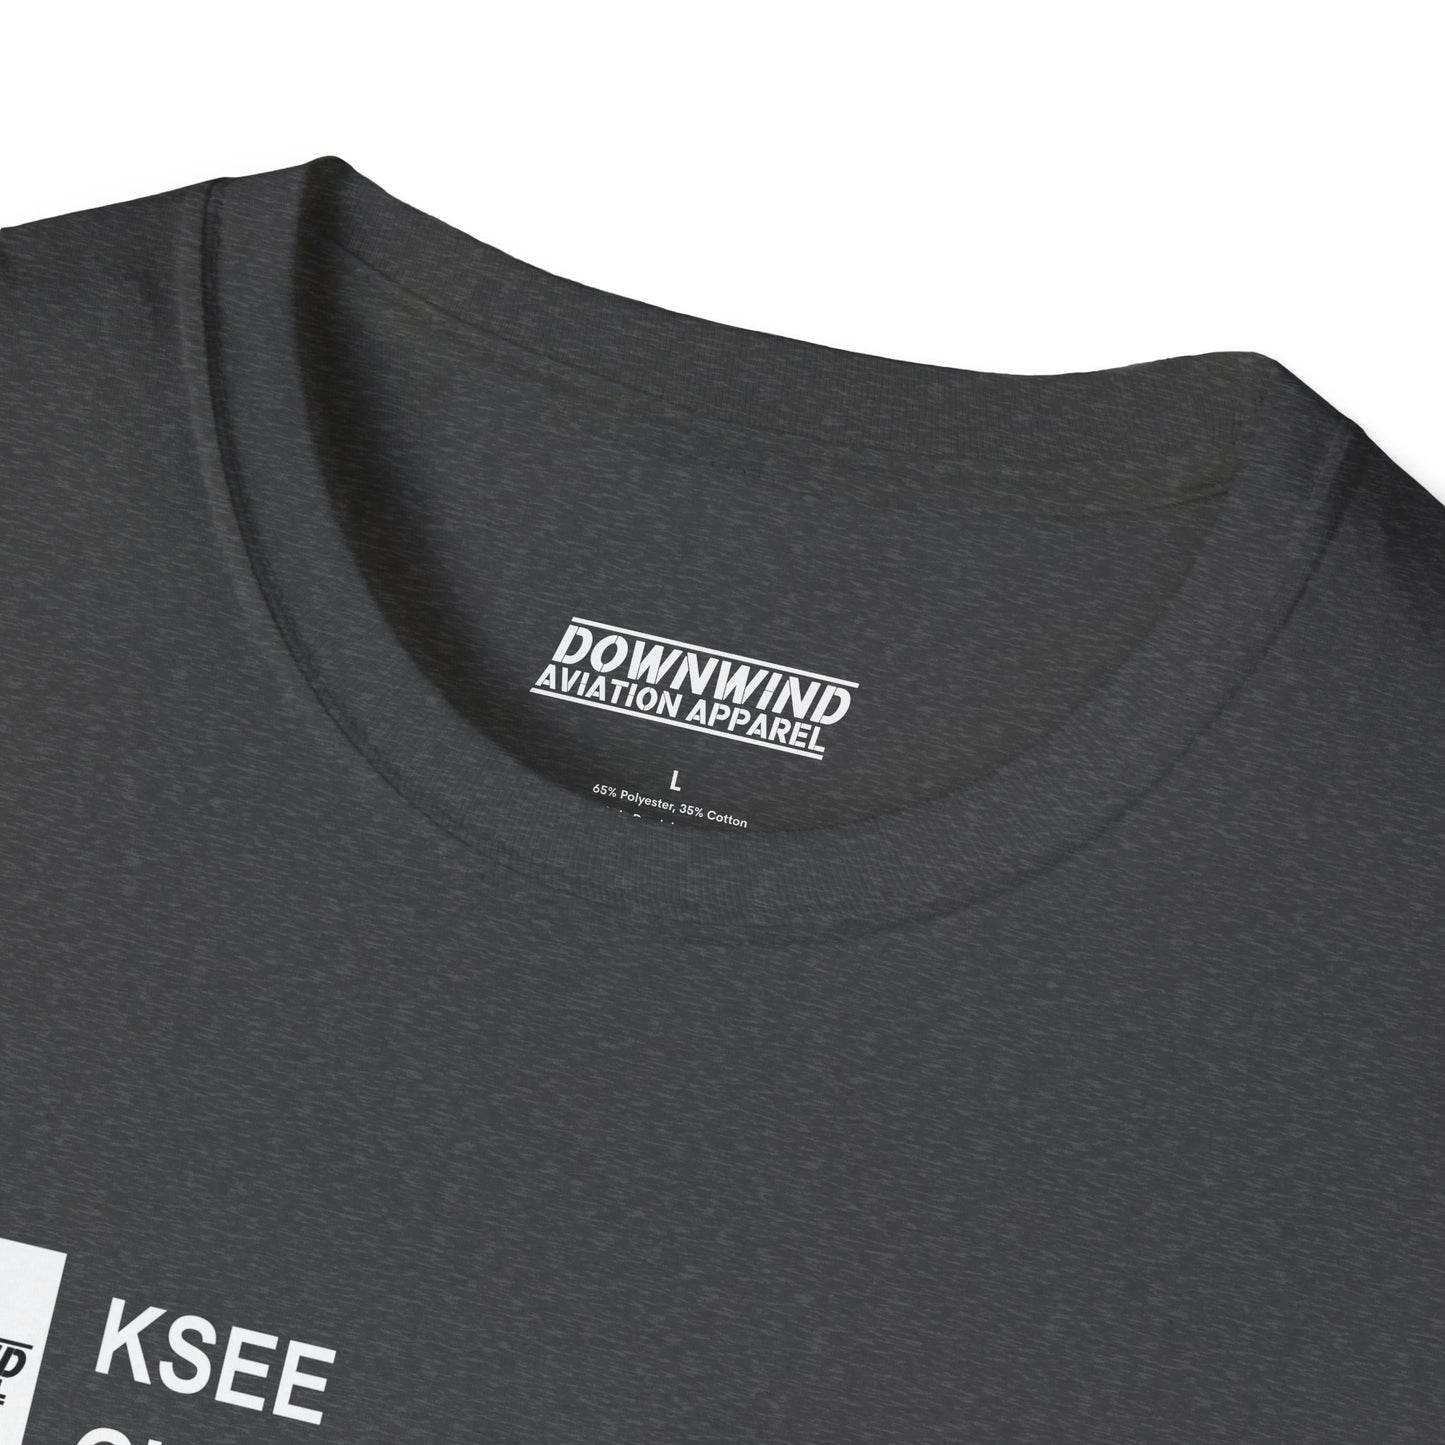 KSEE / Gillespie Field Airport T-Shirt